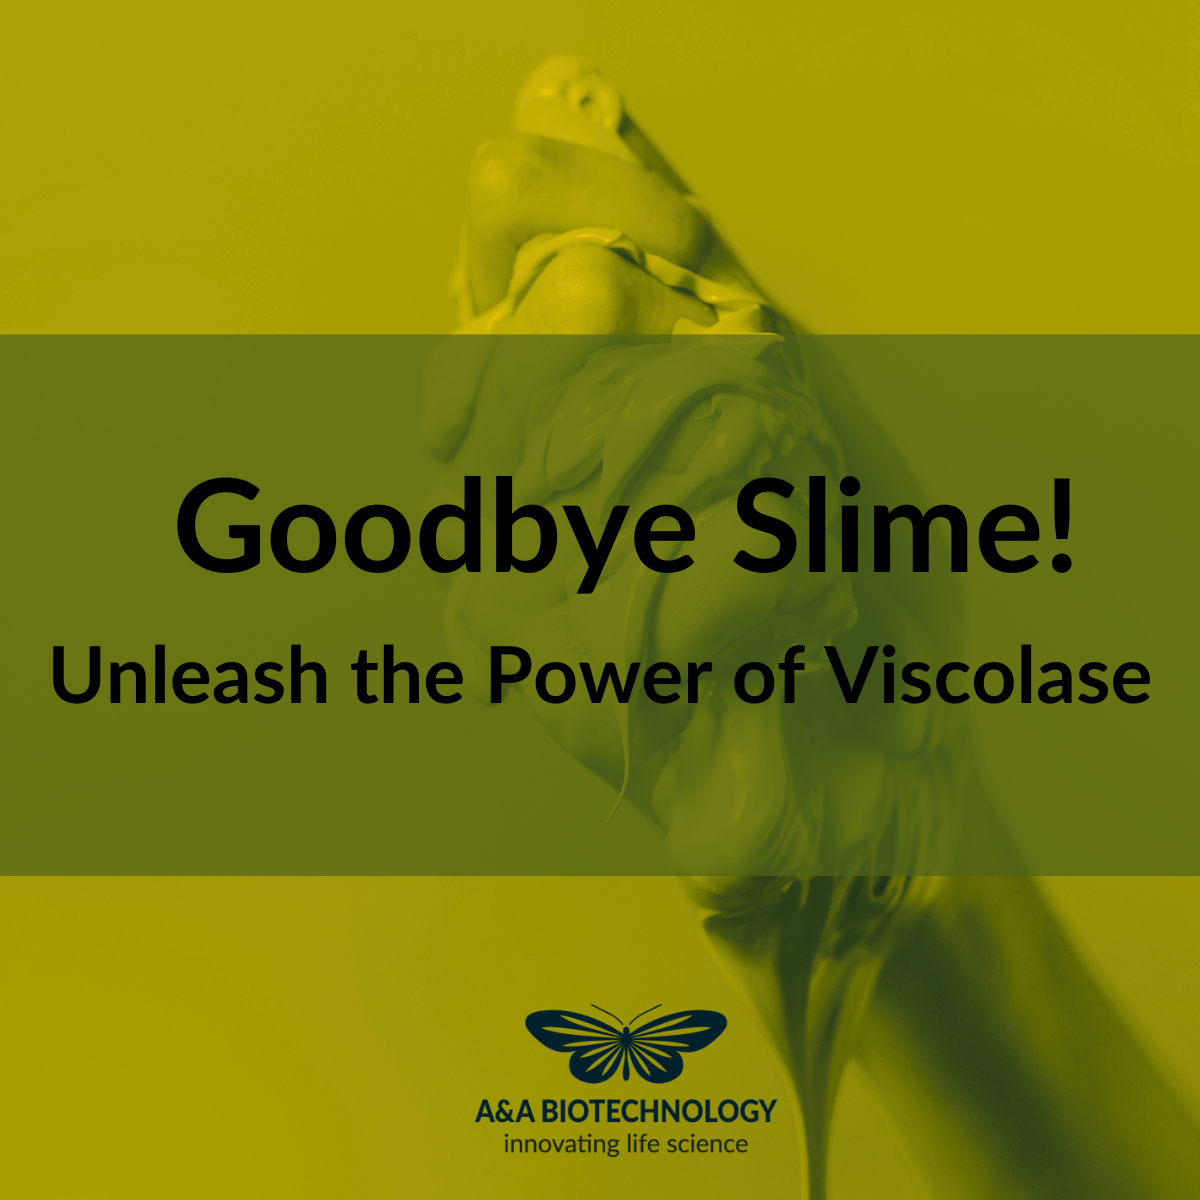 Goodbye slime!